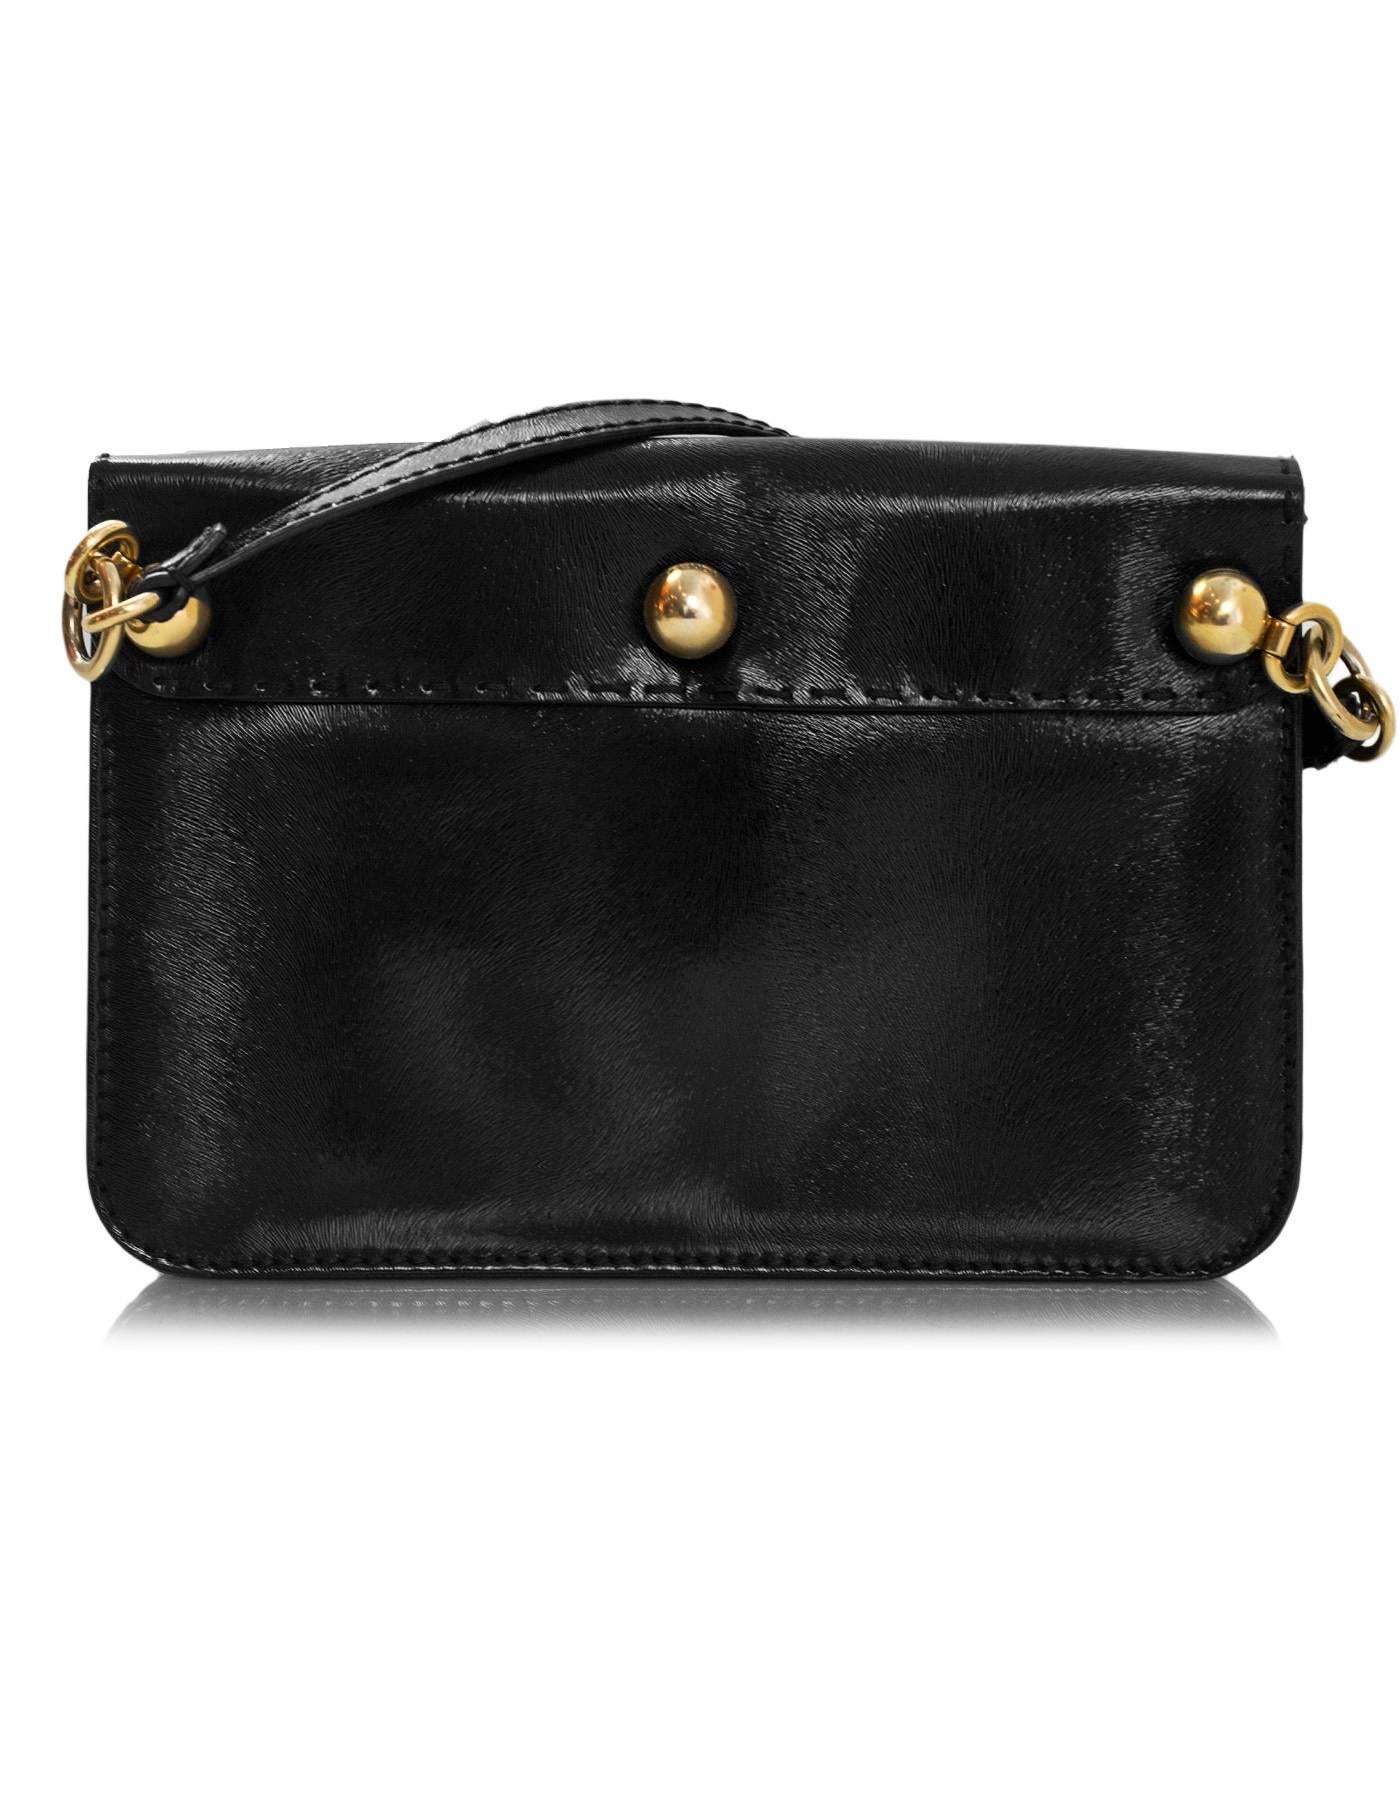 Women's Fendi Black Textured Glazed Leather Studded Crossbody/Clutch Bag 